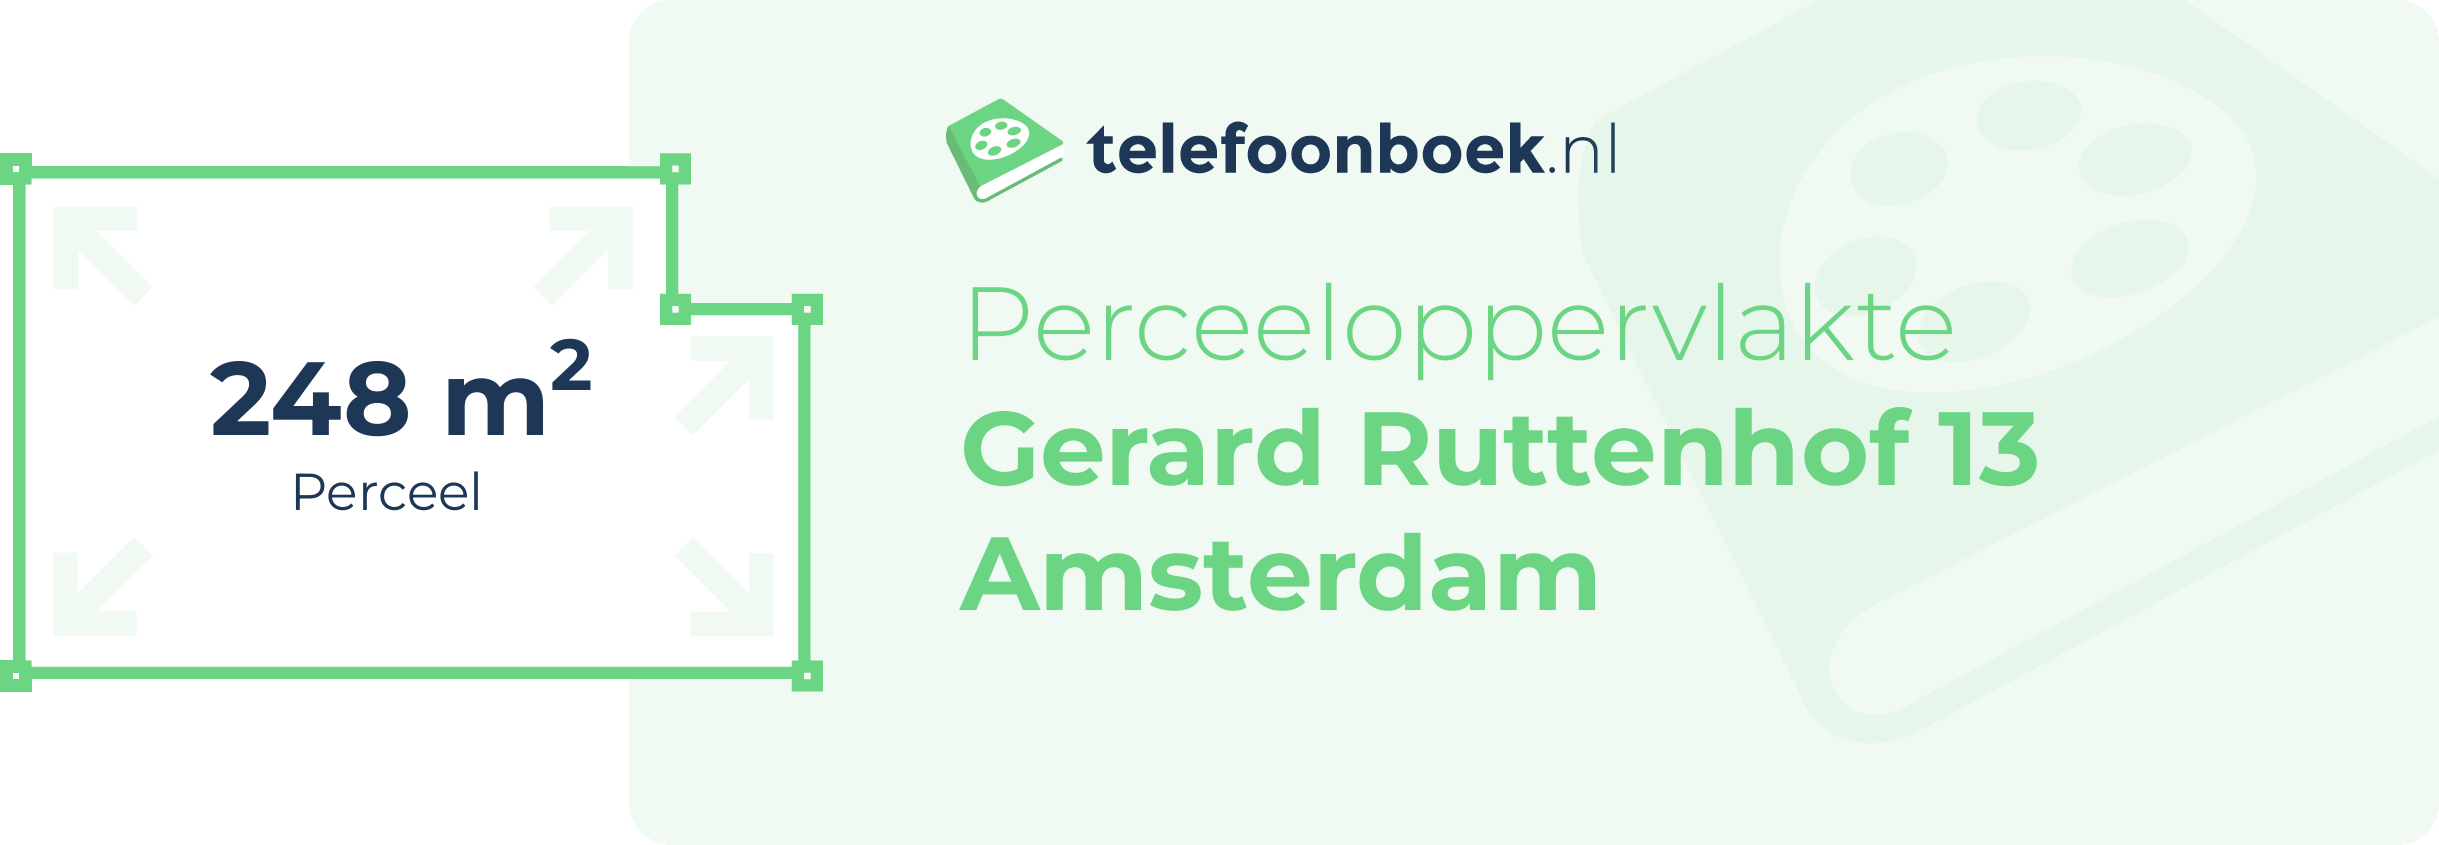 Perceeloppervlakte Gerard Ruttenhof 13 Amsterdam